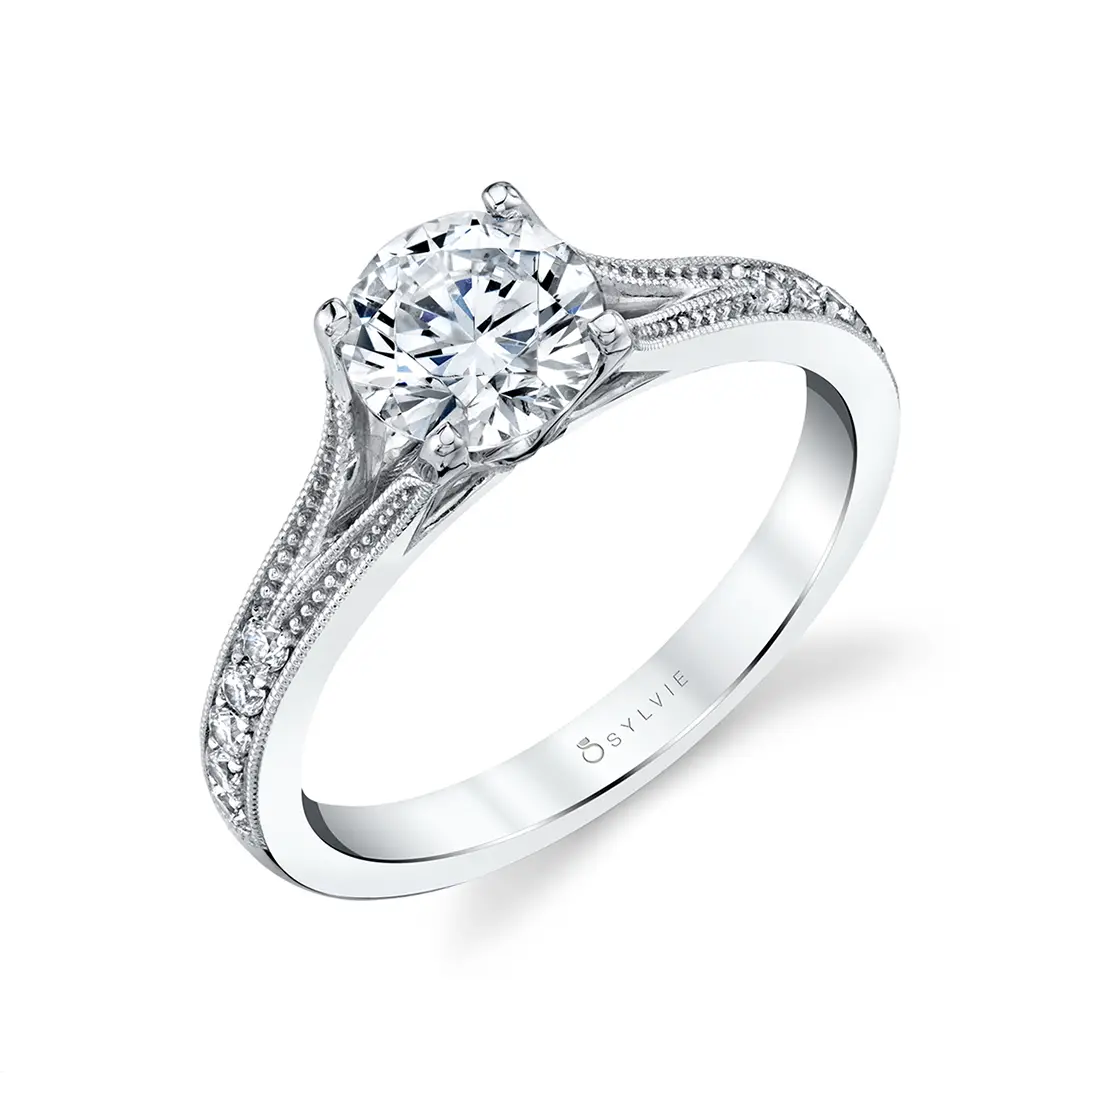 Your Future Bride Will Love These Unique Diamond Engagement Rings |  Cornelis Hollander